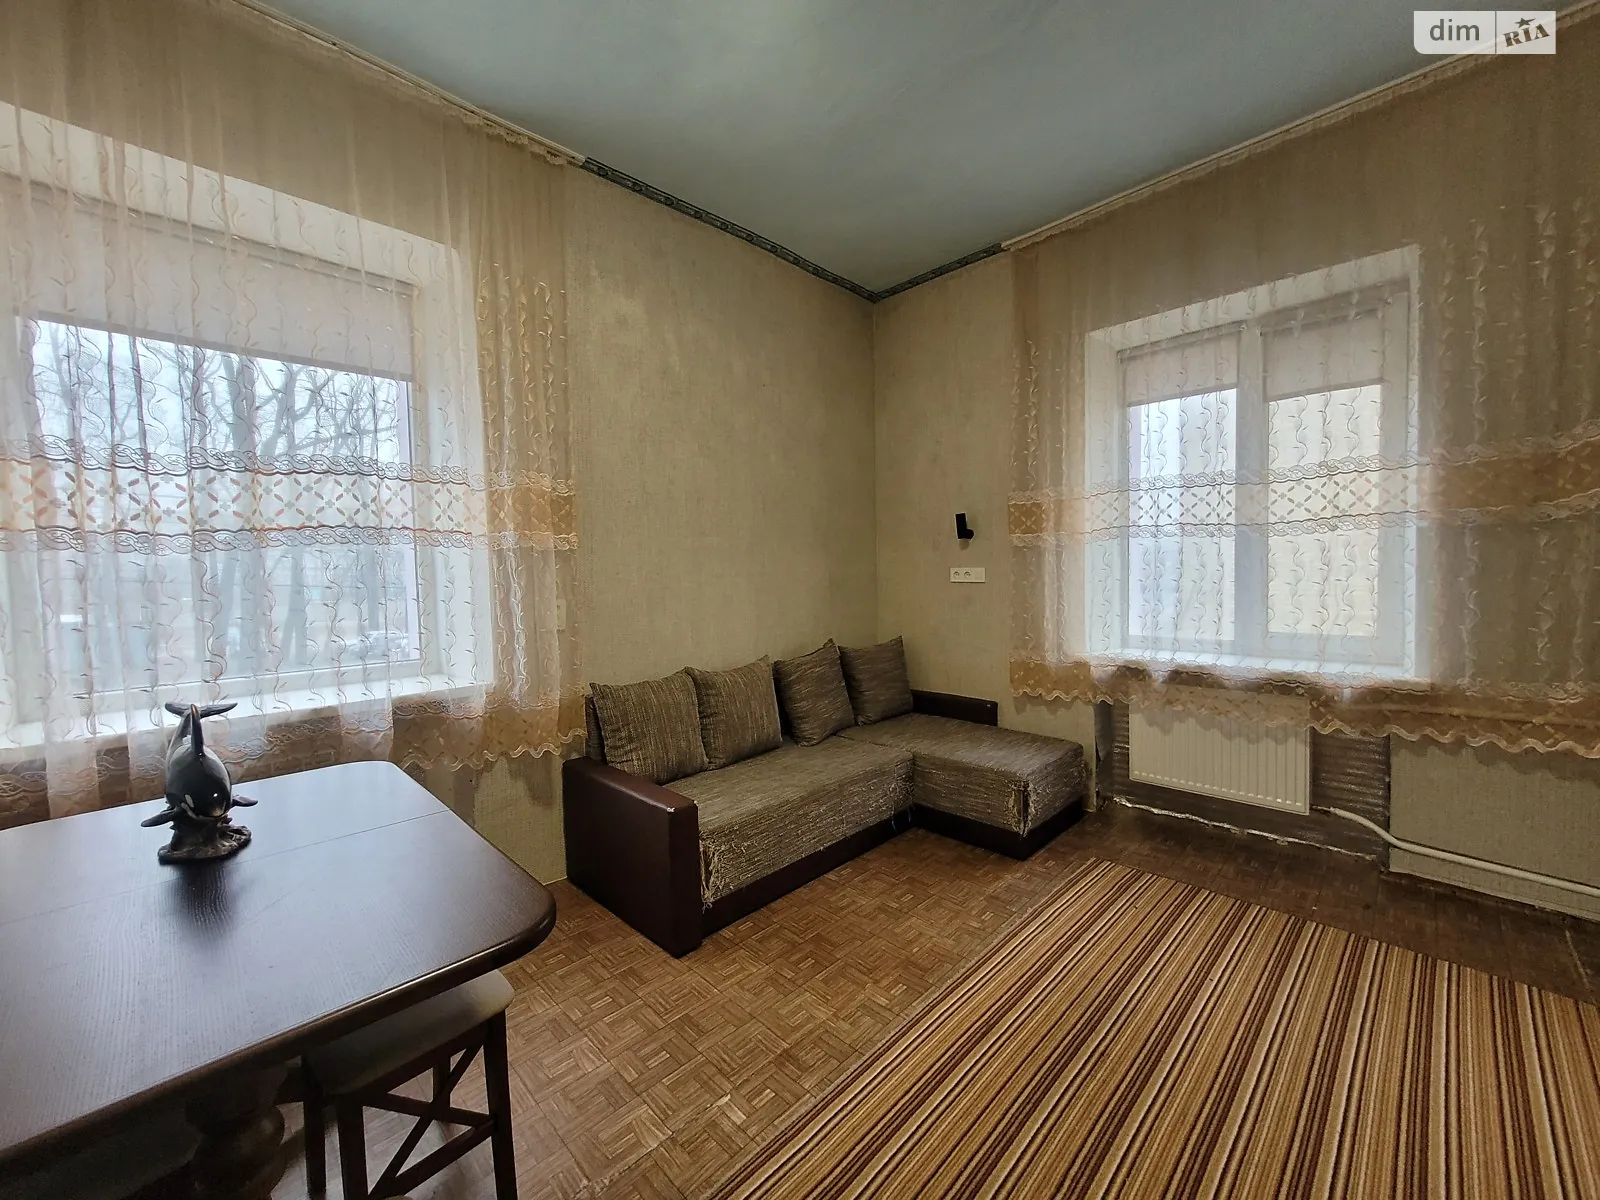 Продается комната 42 кв. м в Вишневом, цена: 25000 $ - фото 1